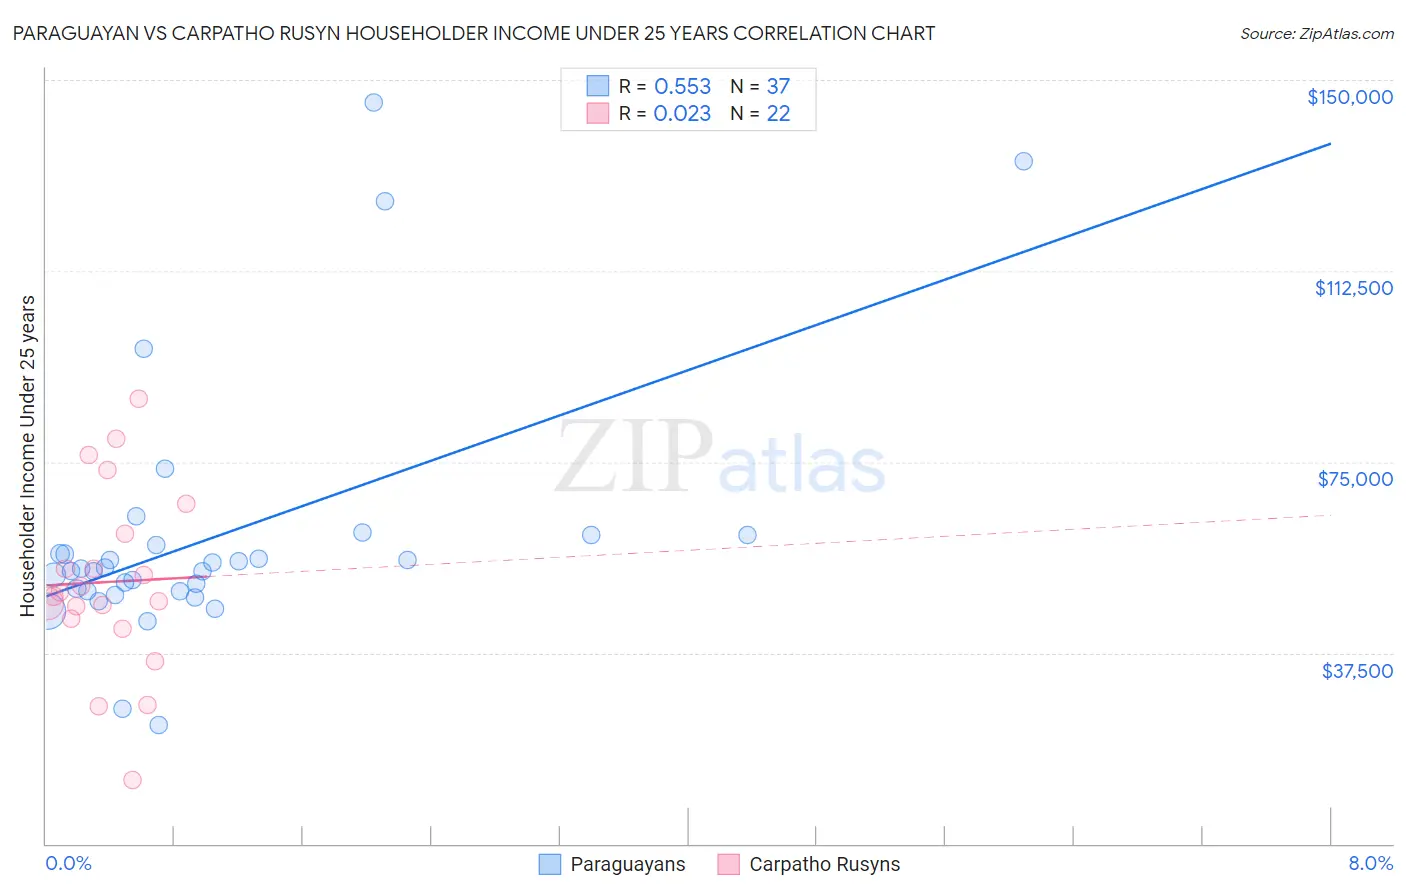 Paraguayan vs Carpatho Rusyn Householder Income Under 25 years